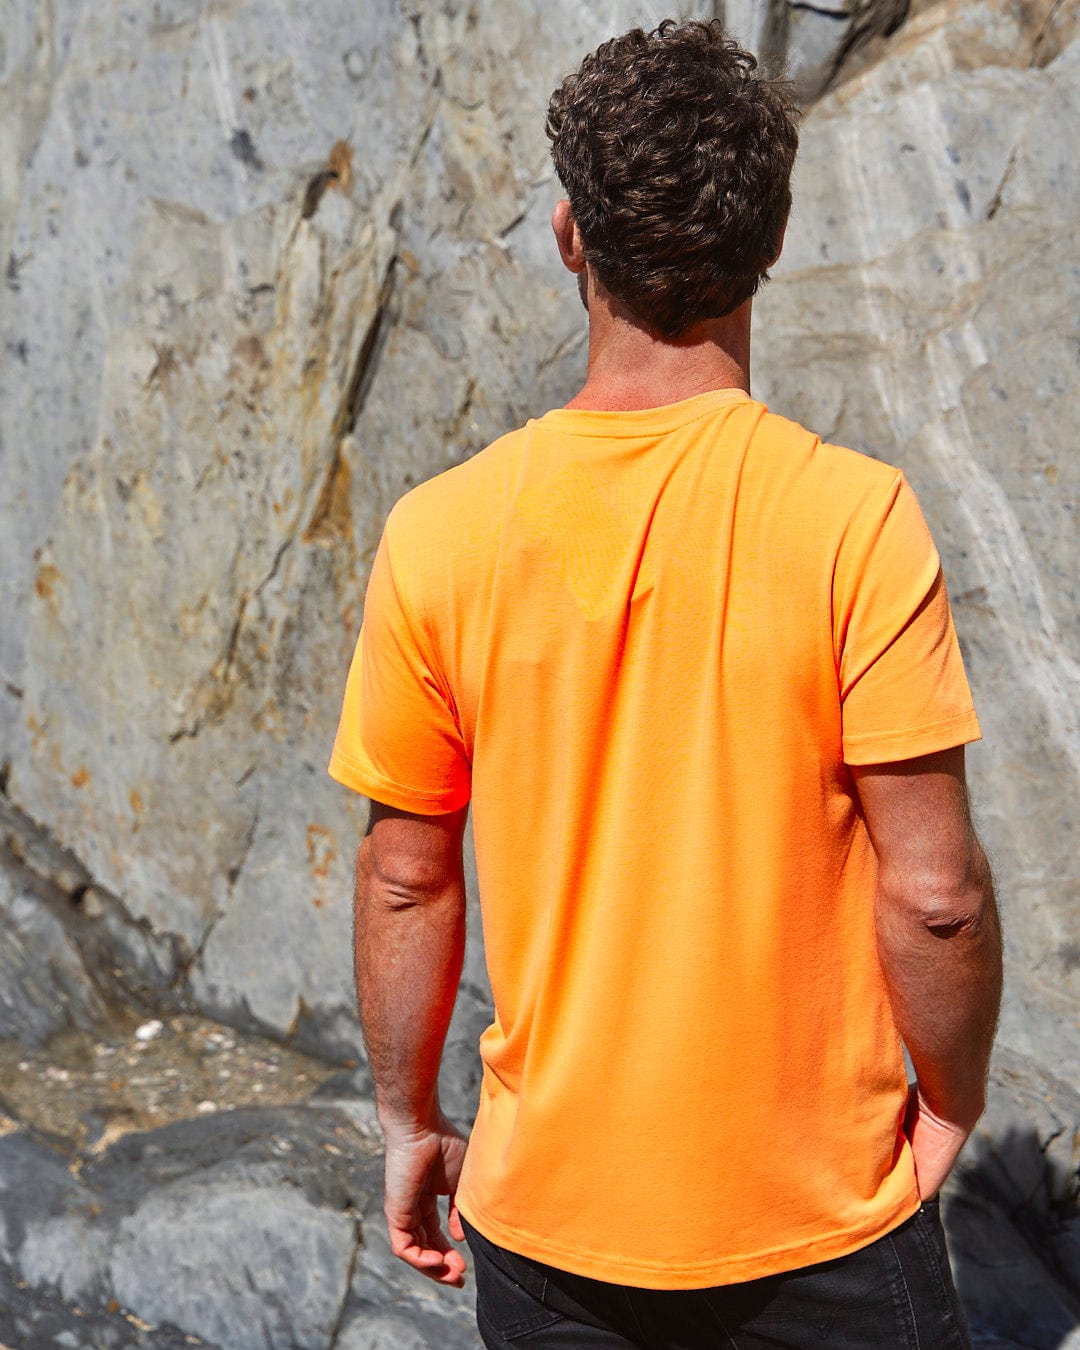 A man wearing a Saltrock Flame Tri - Mens Recycled Short Sleeve T-Shirt - Light Orange standing next to rocks.